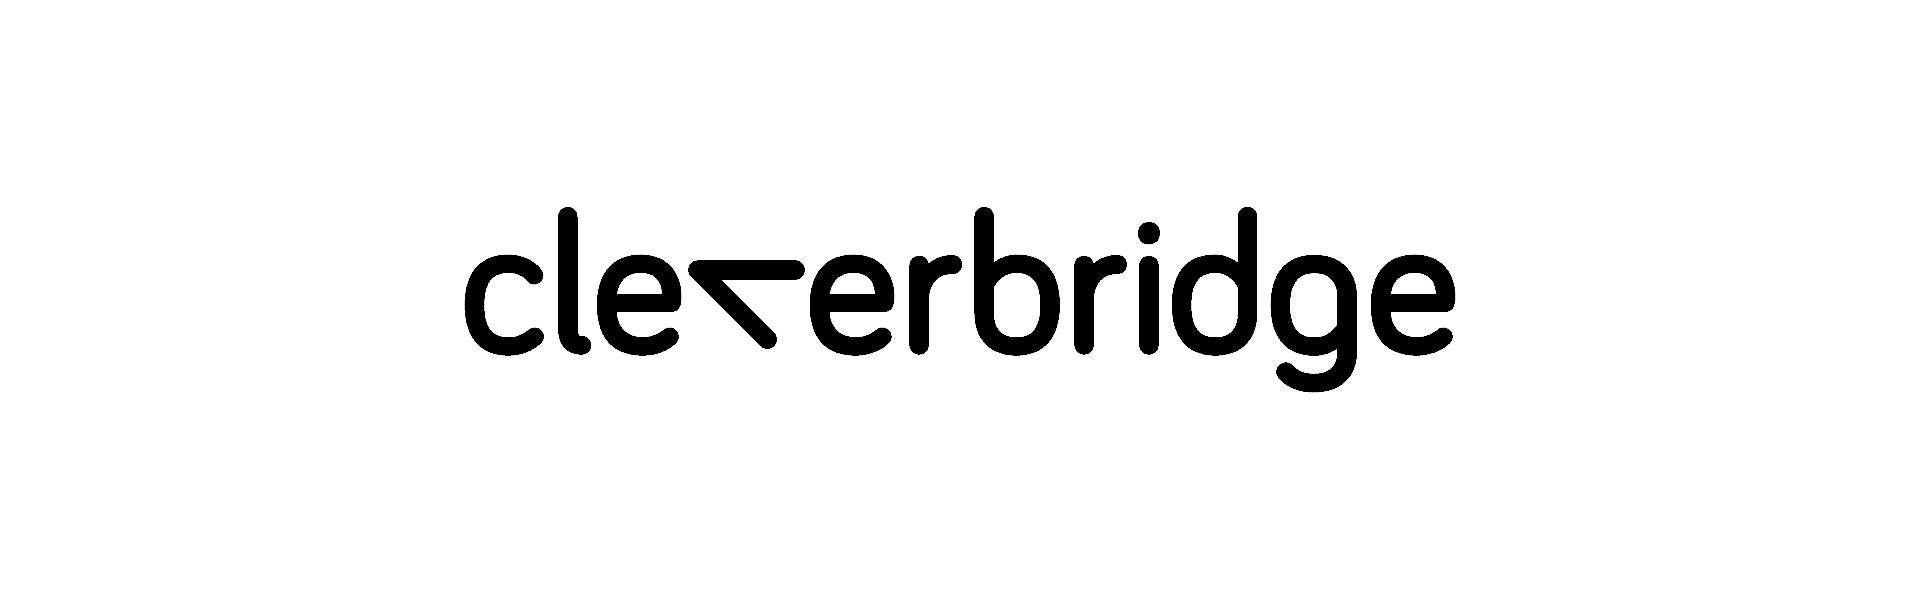 cleverbridge logo